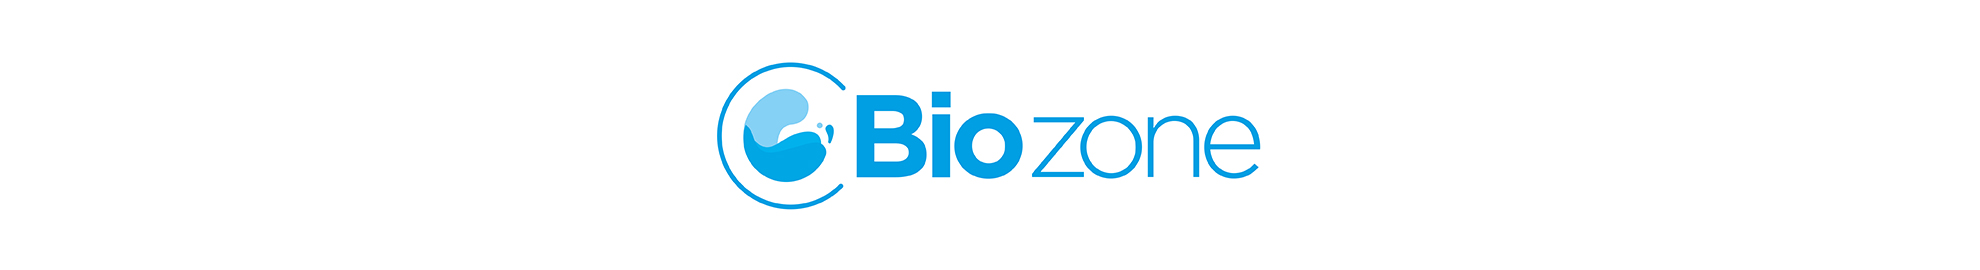 Biozone Liquid